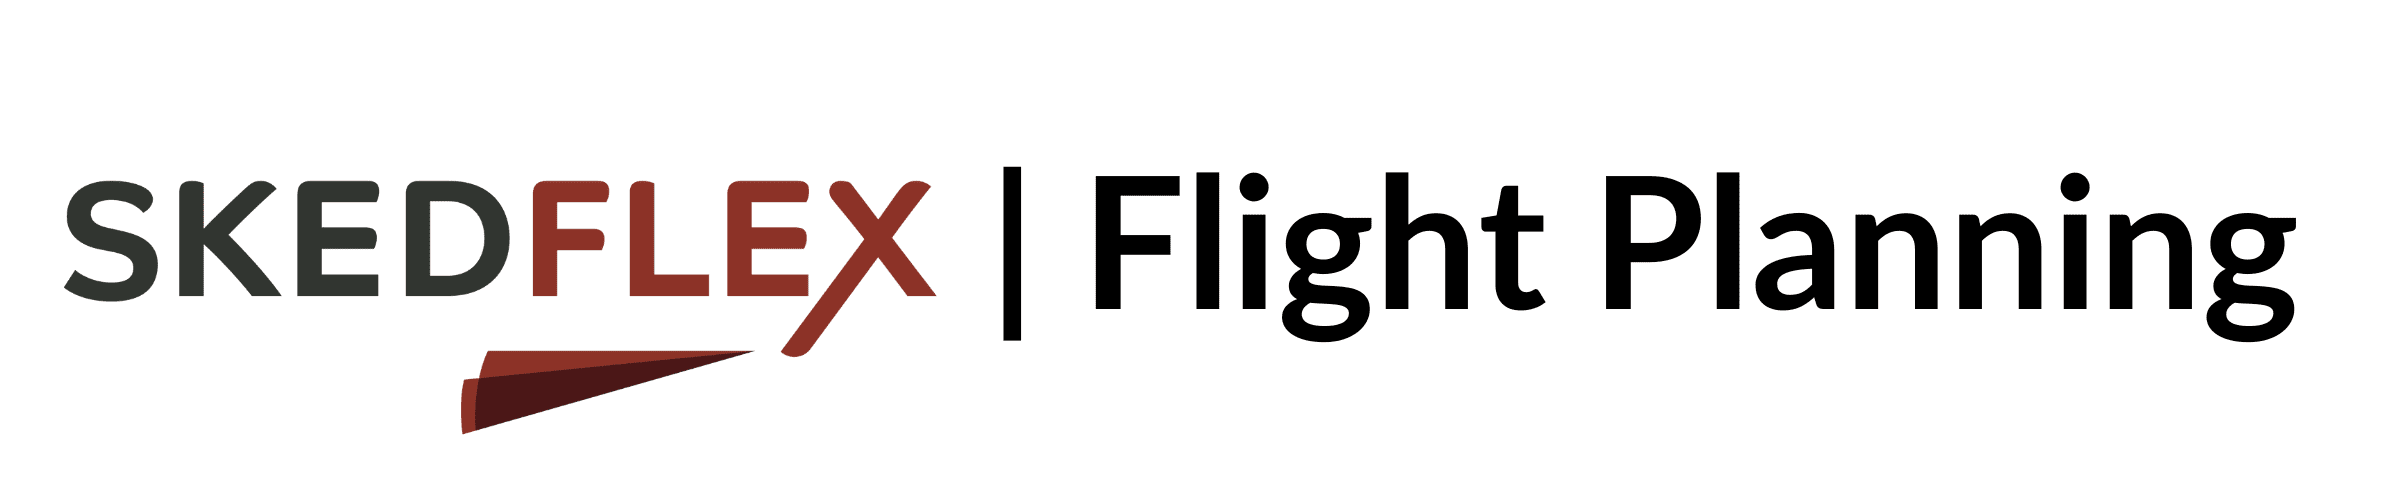 SkedFlex Airline Flight Planning Software